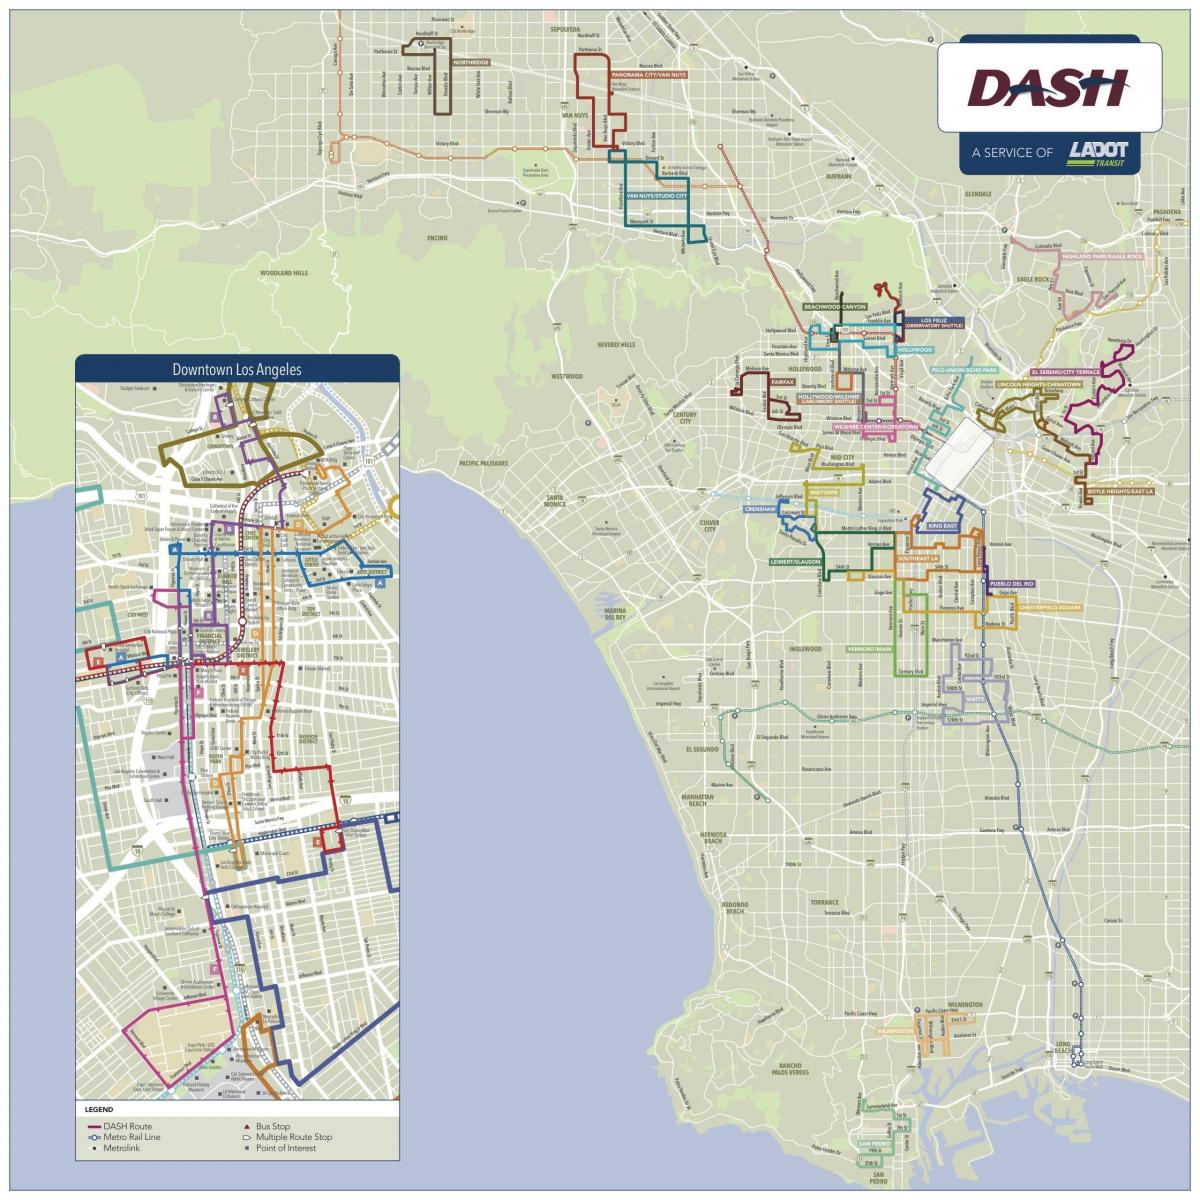 Los Ángeles dash mapa